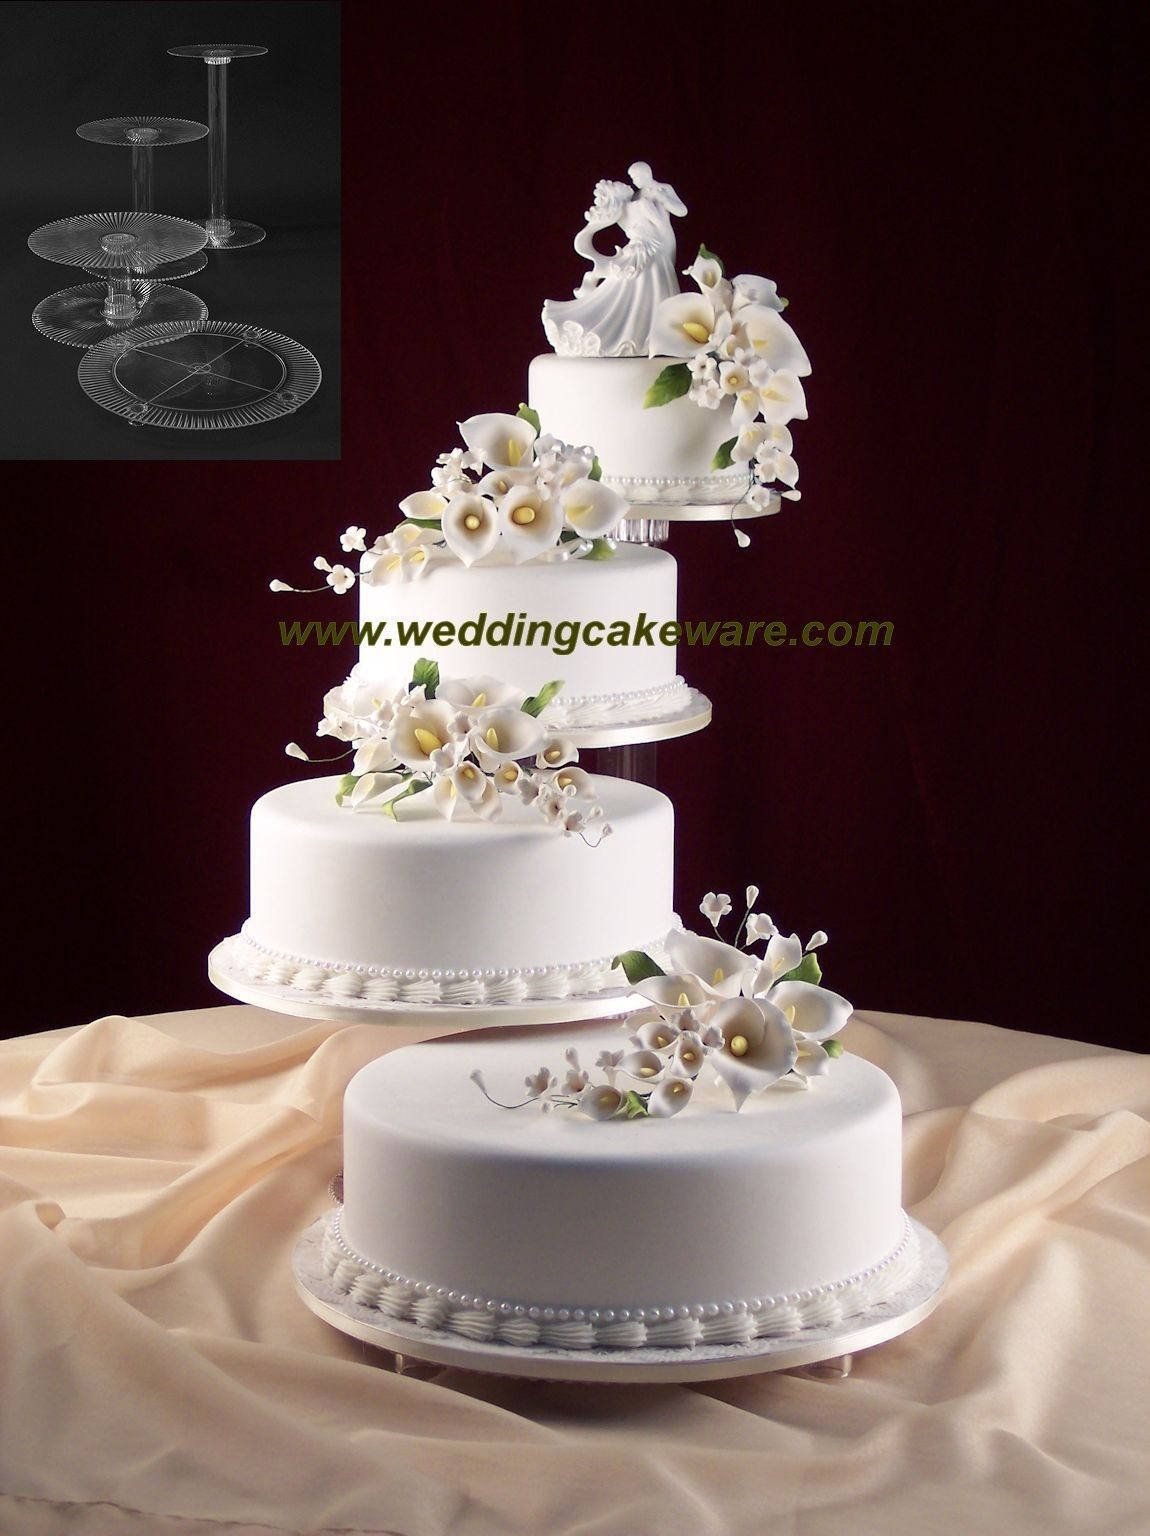 4 Tier Wedding Cakes
 Four tier wedding cake stand idea in 2017